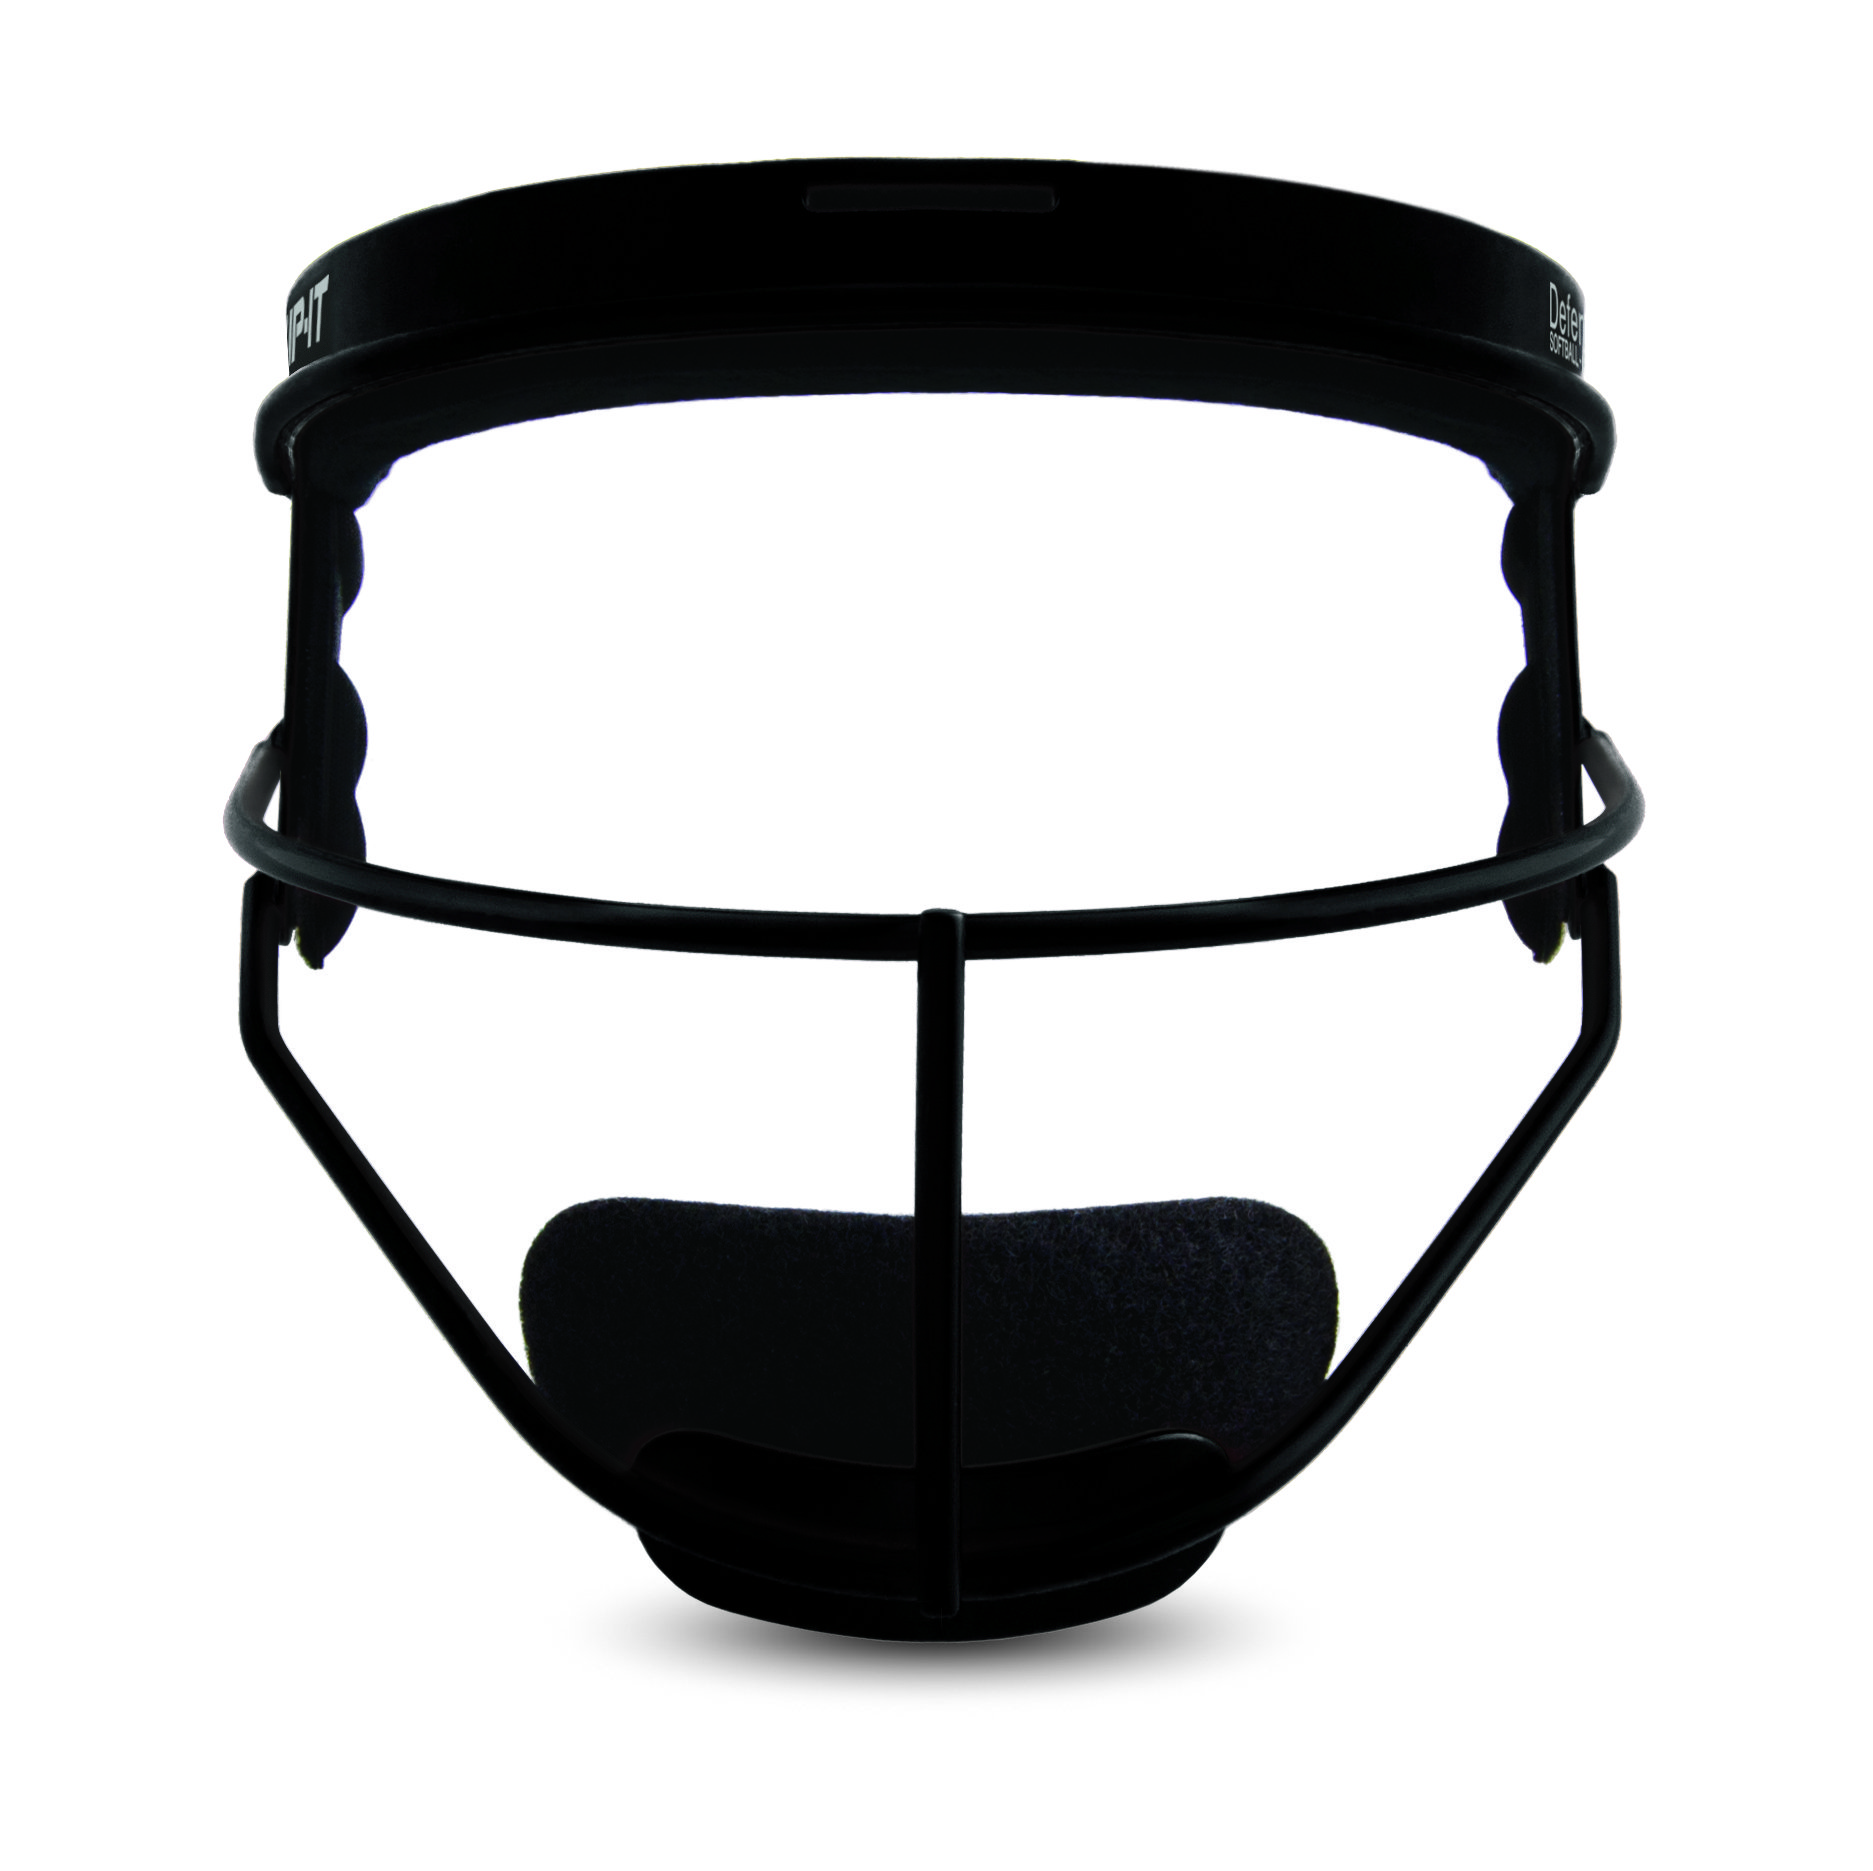 Black RIP-IT Defense Mask Softball Adult